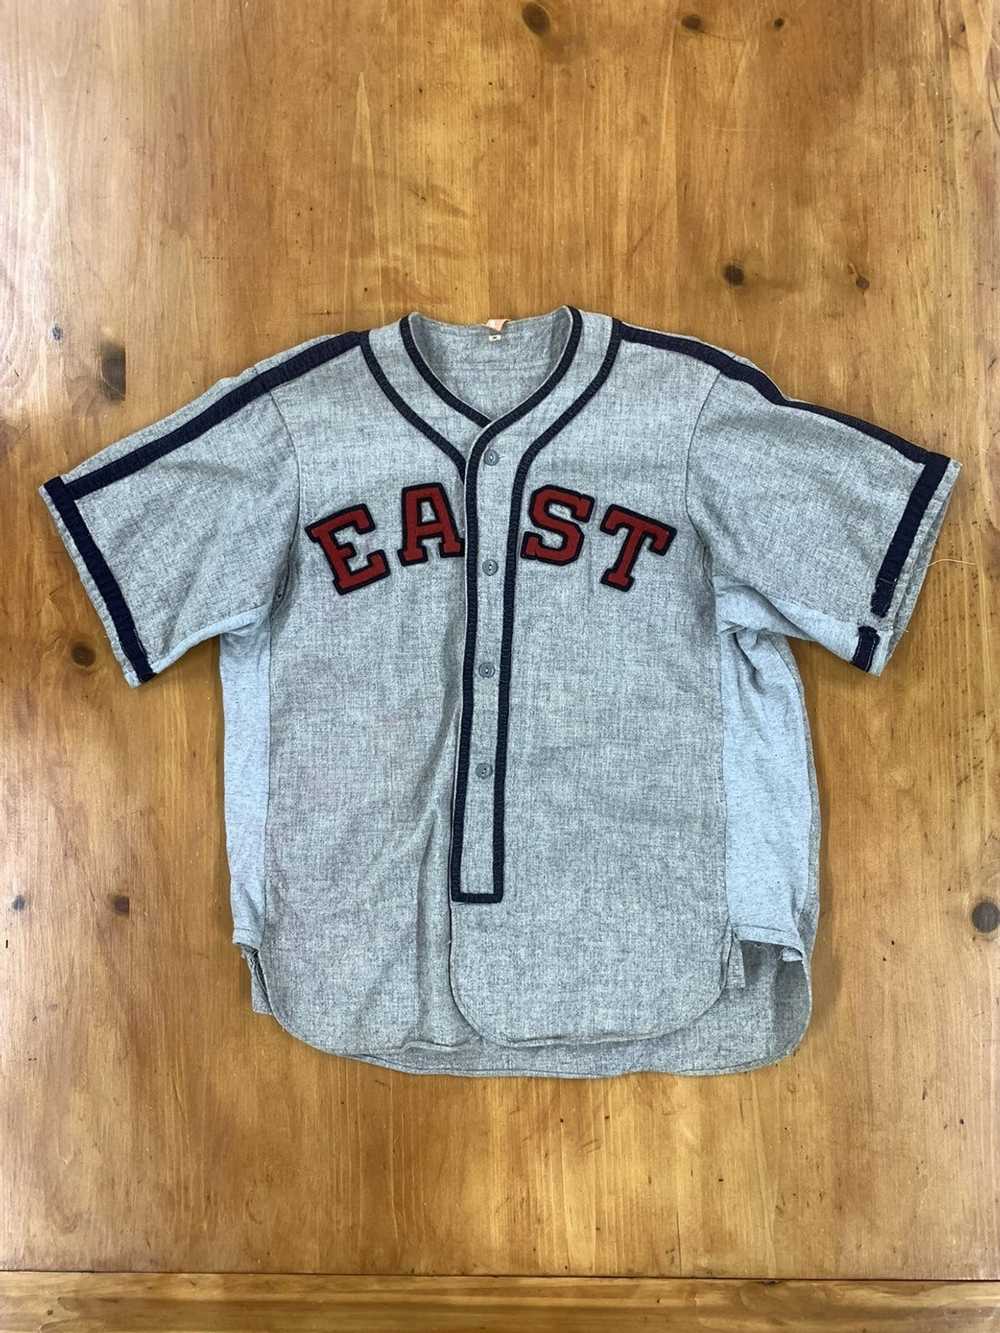 RARE 1950-60s Vintage Baseball Jersey - Jerseys & Cleats